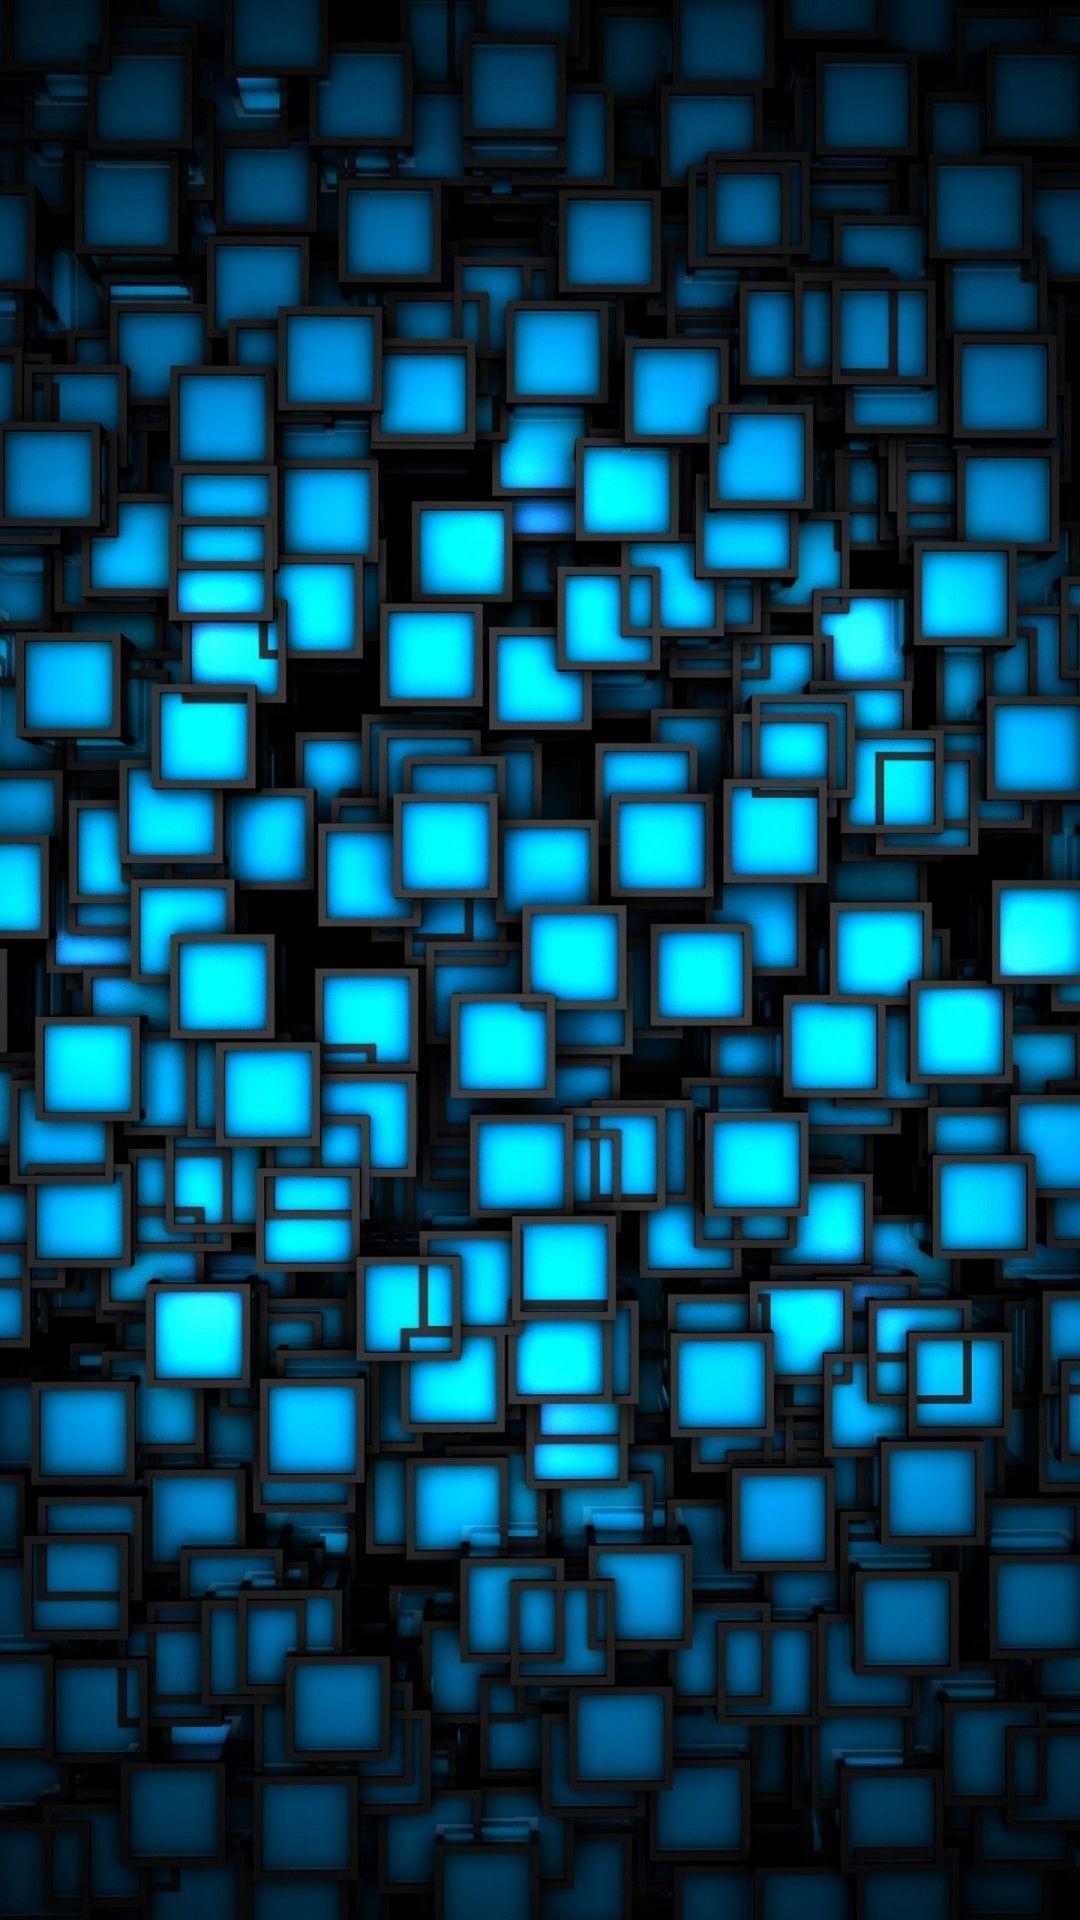 3D Blue iPhone Wallpaper iPhone Wallpaper in 2020